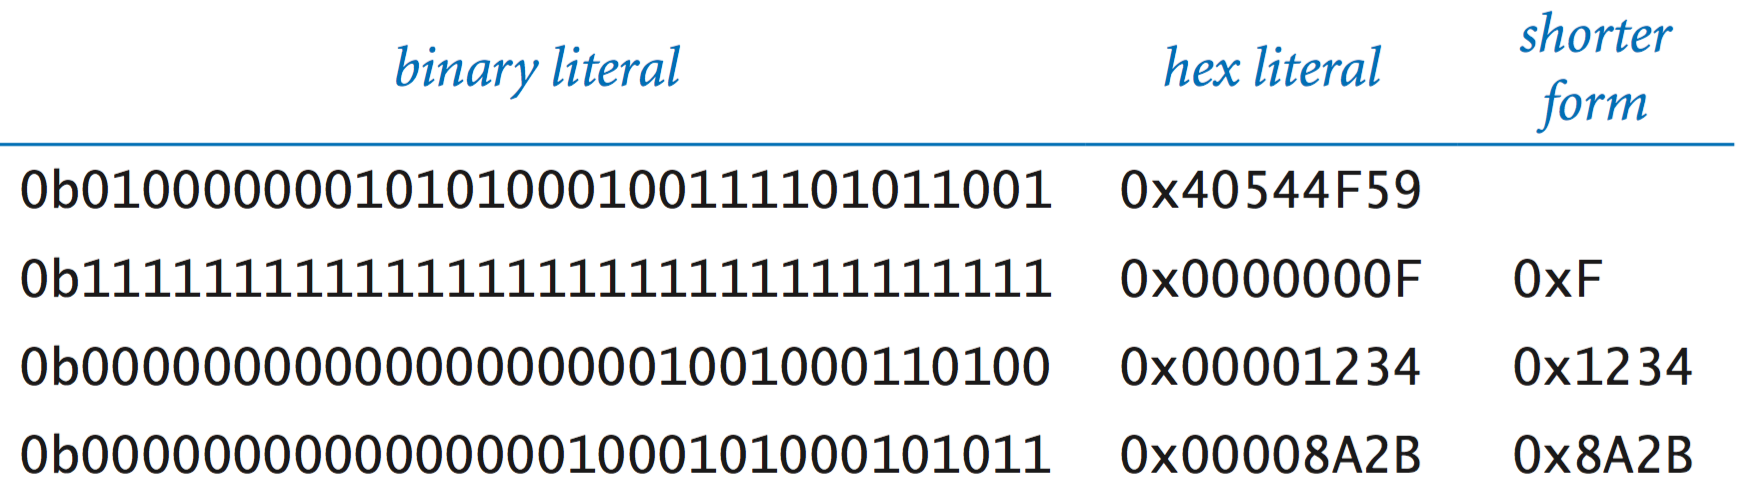 binary, decimal, and hex literals